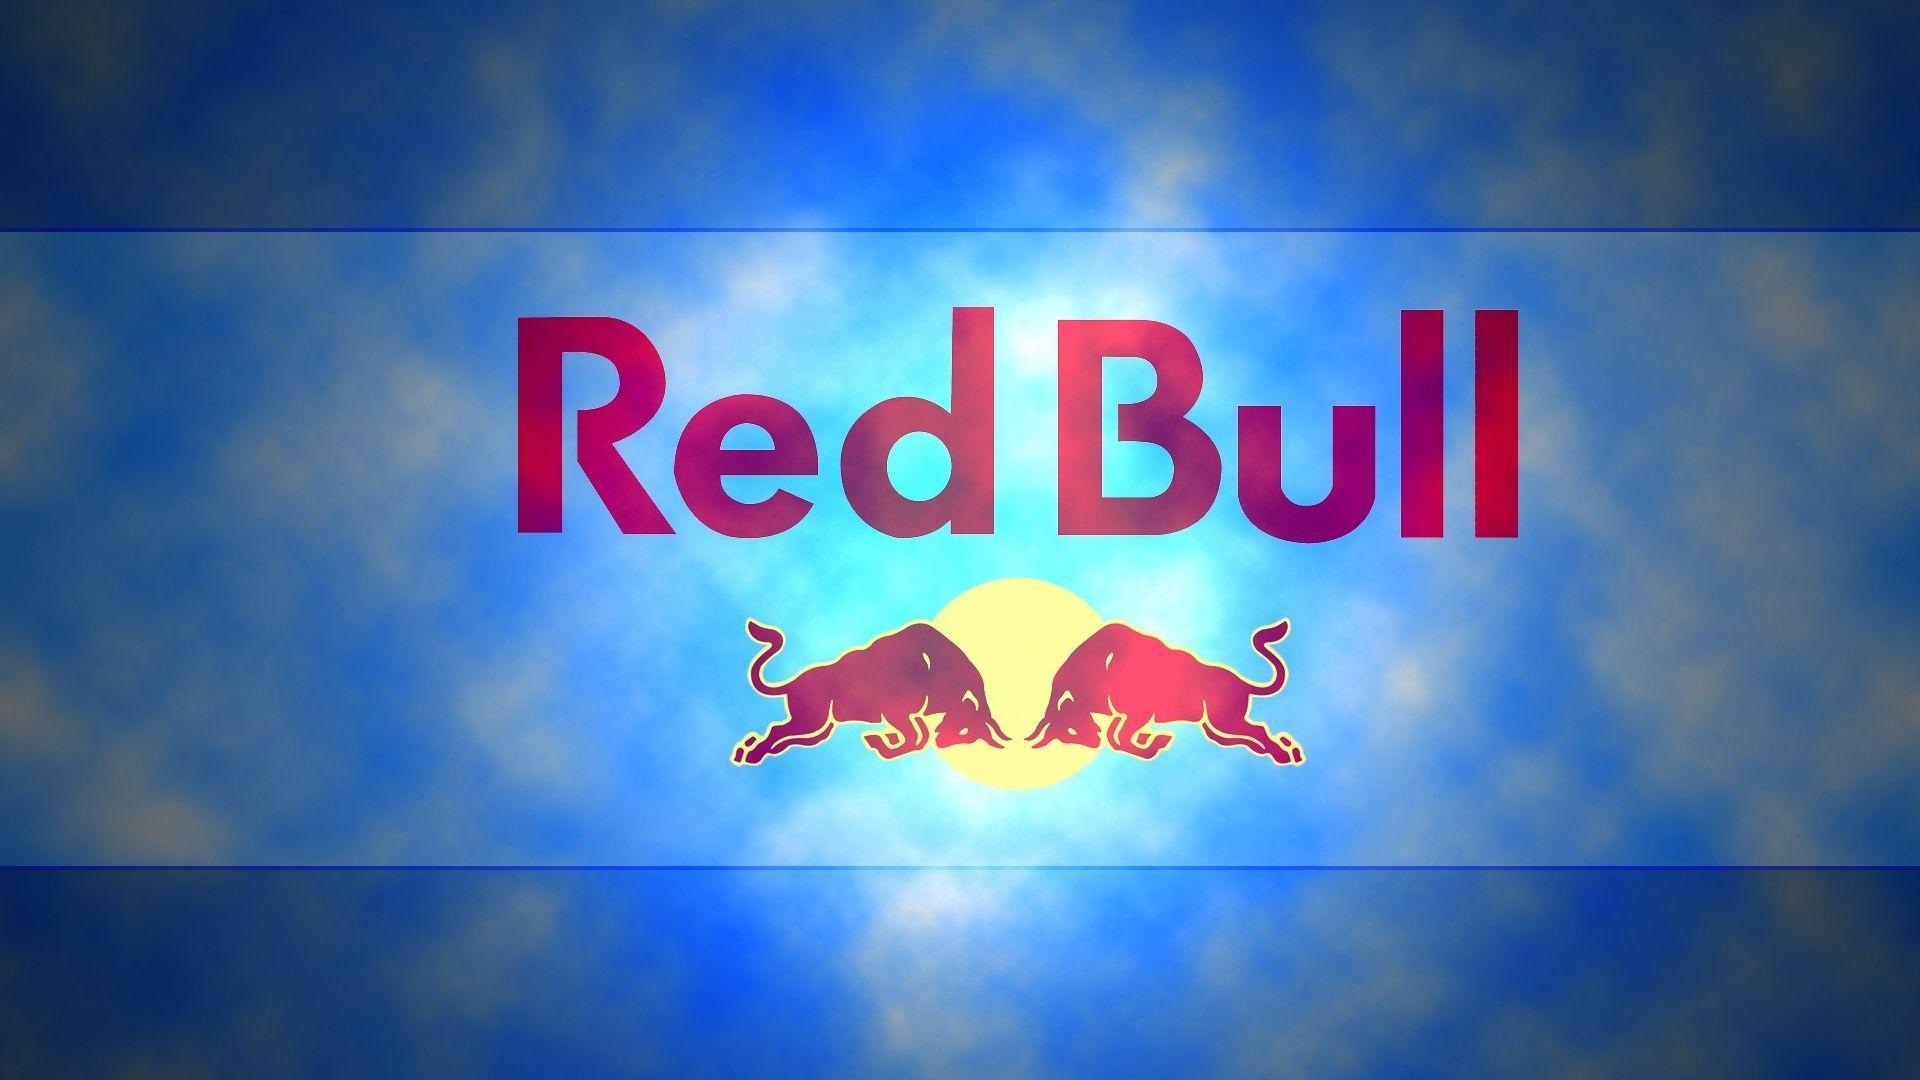 Fonds d&;écran Red Bull, tous les wallpaper Red Bull